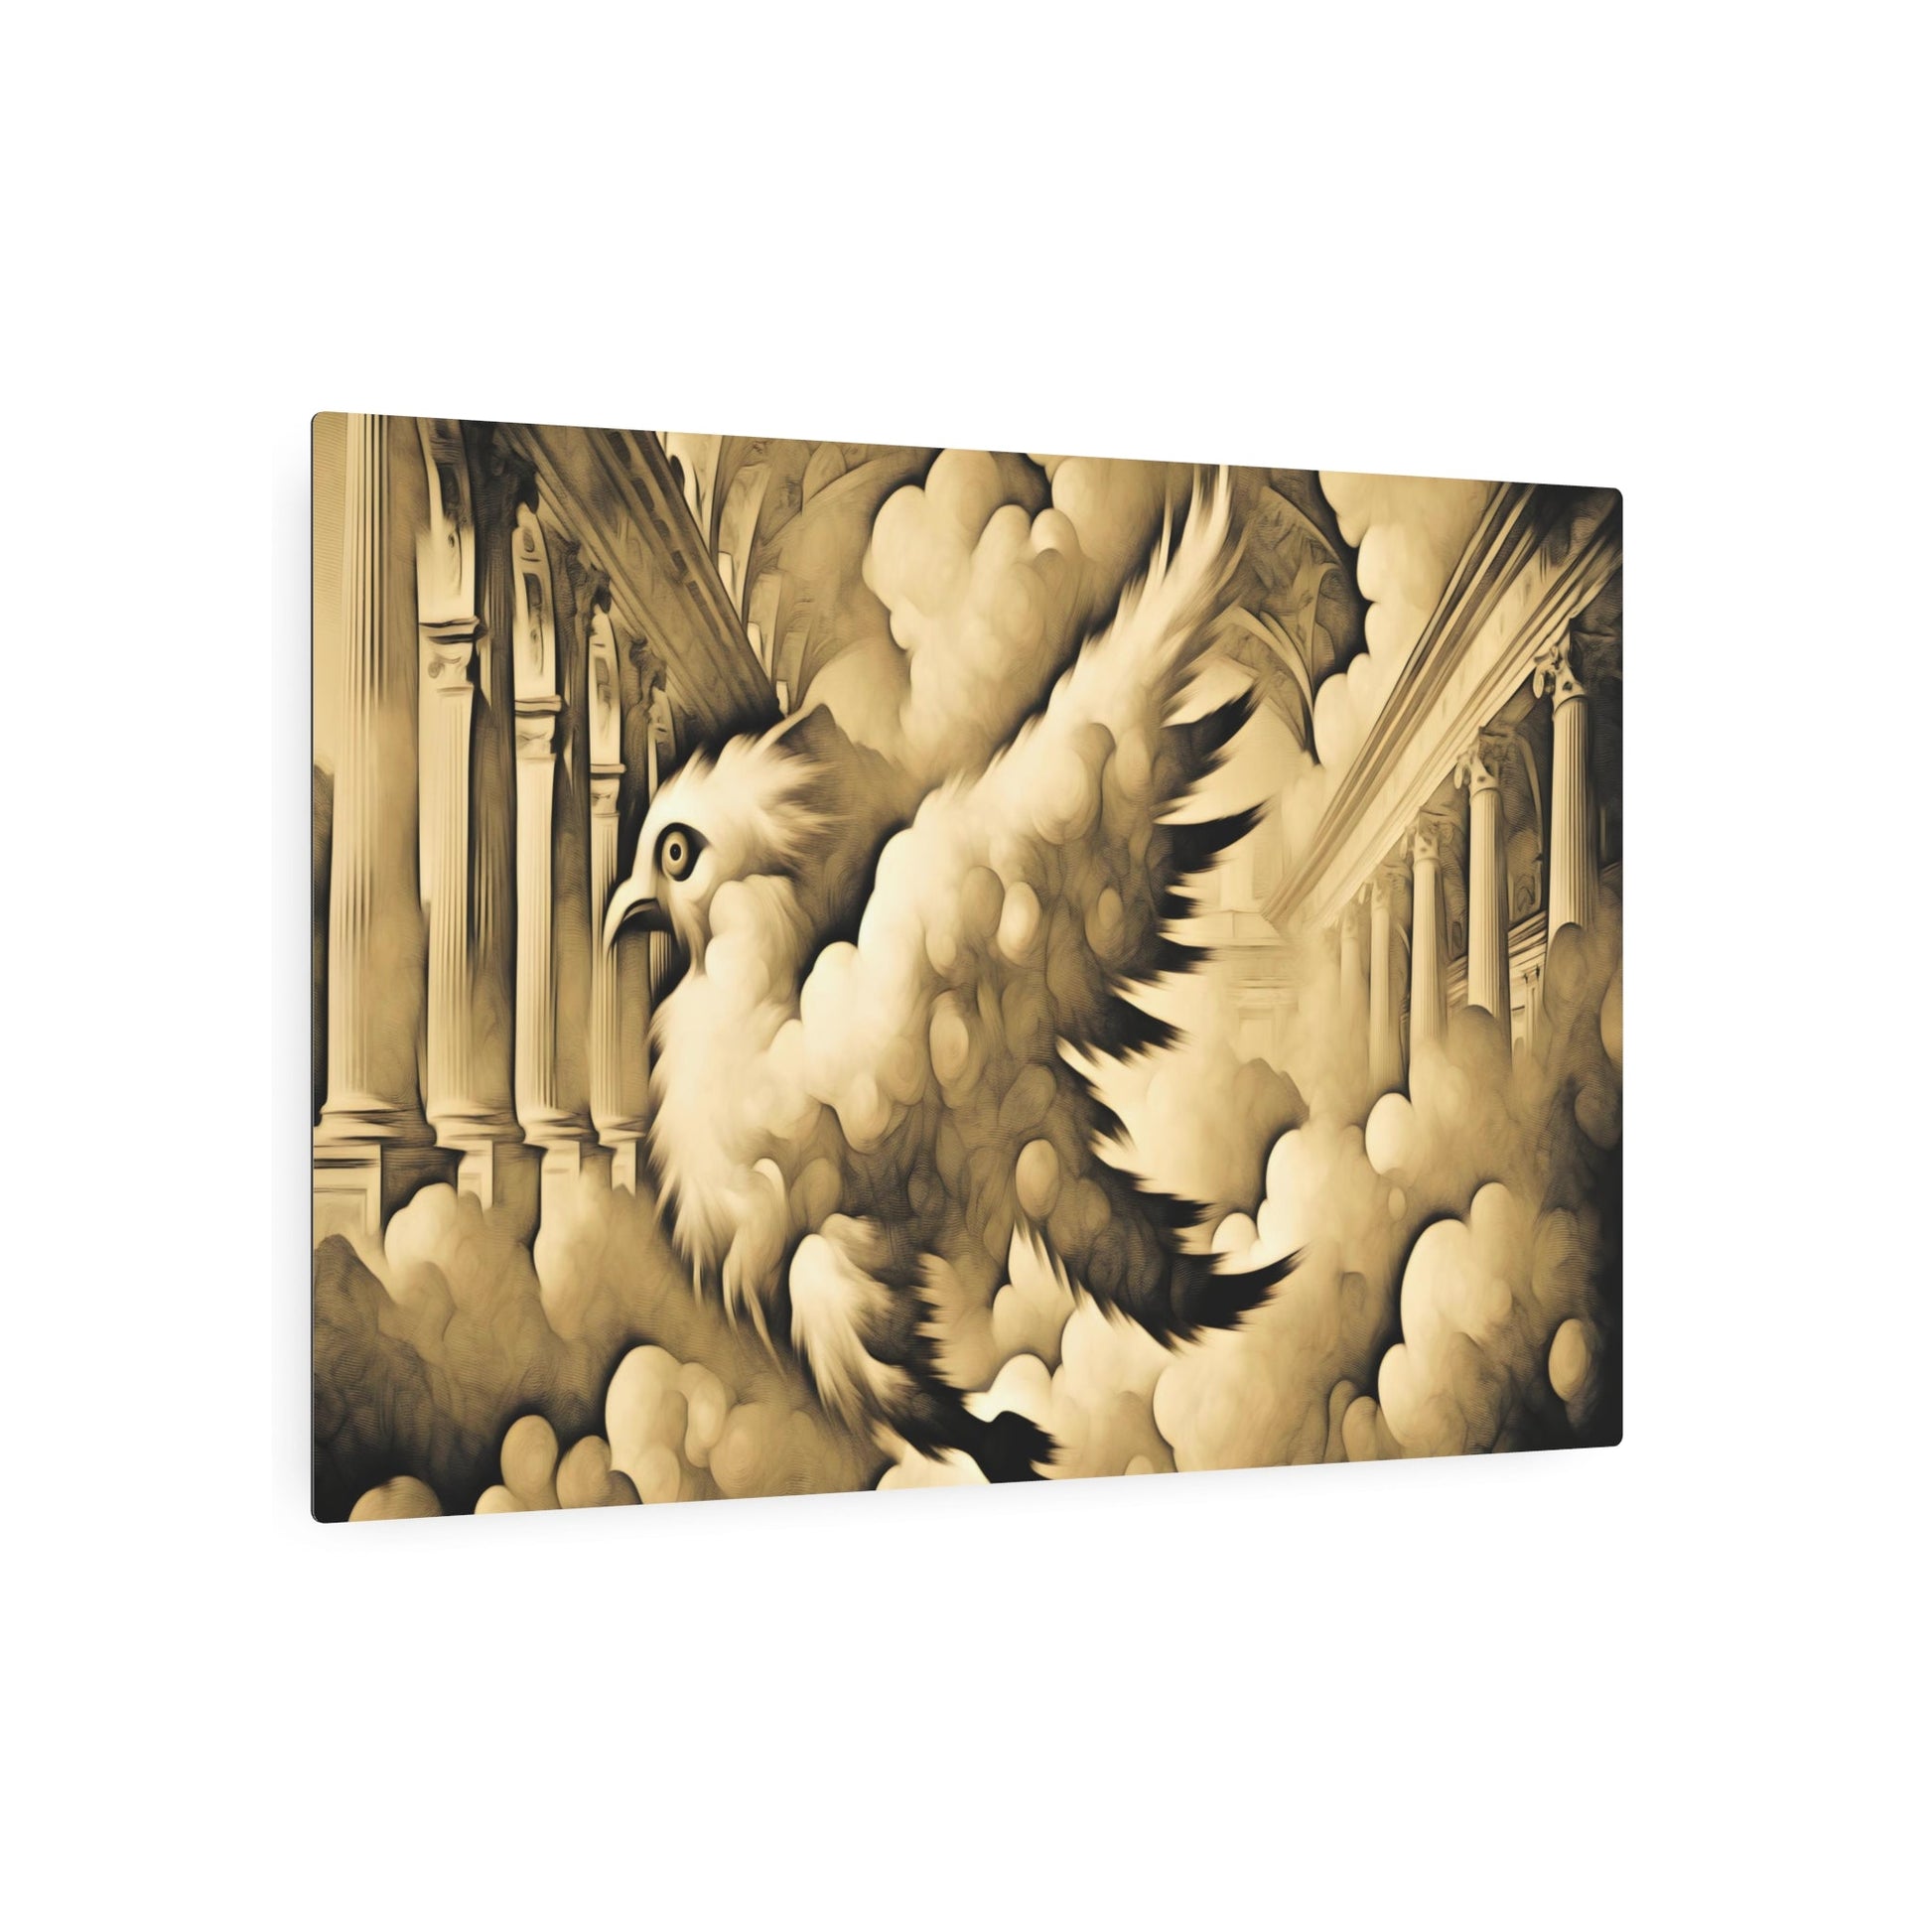 Metal Poster Art | "Baroque Art Inspired Bird Illustration: Western Art Styles Depicting Avian Majesty in the Baroque Period" - Metal Poster Art 36″ x 24″ (Horizontal) 0.12''